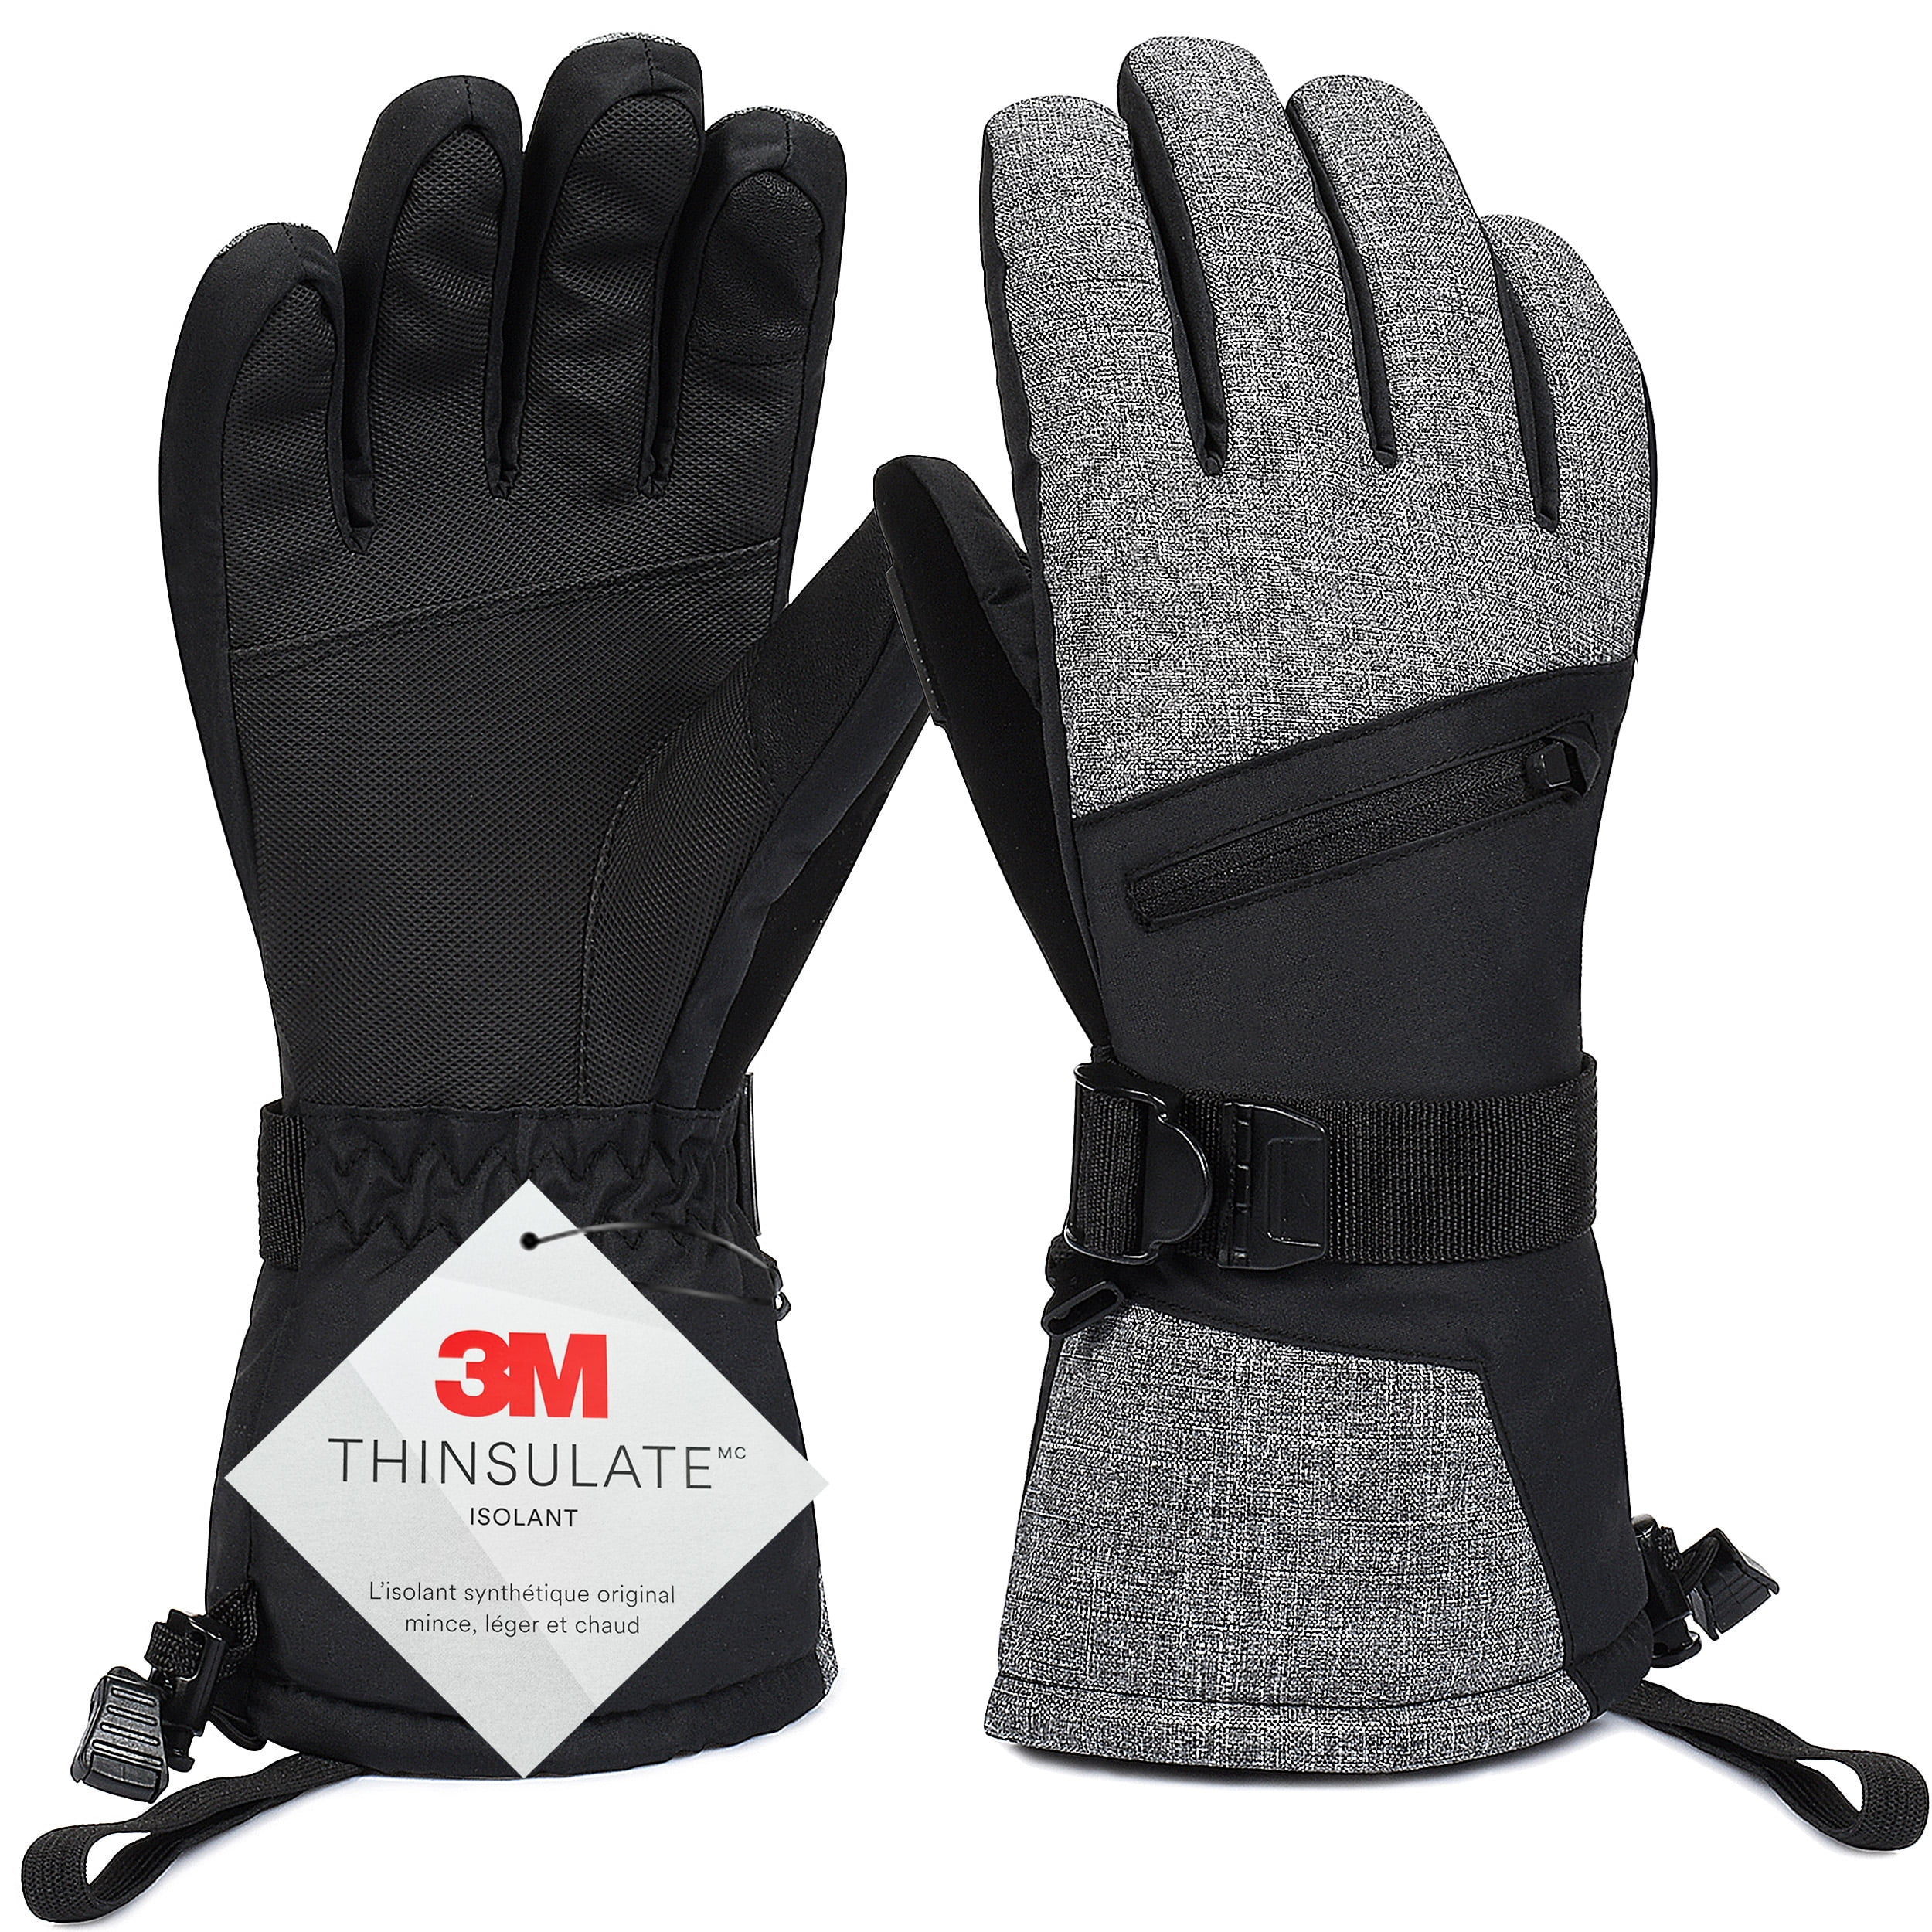 Ski Gloves,VELAZZIO Waterproof Snowboard Gloves Breathable 3M Thinsulate Insulated